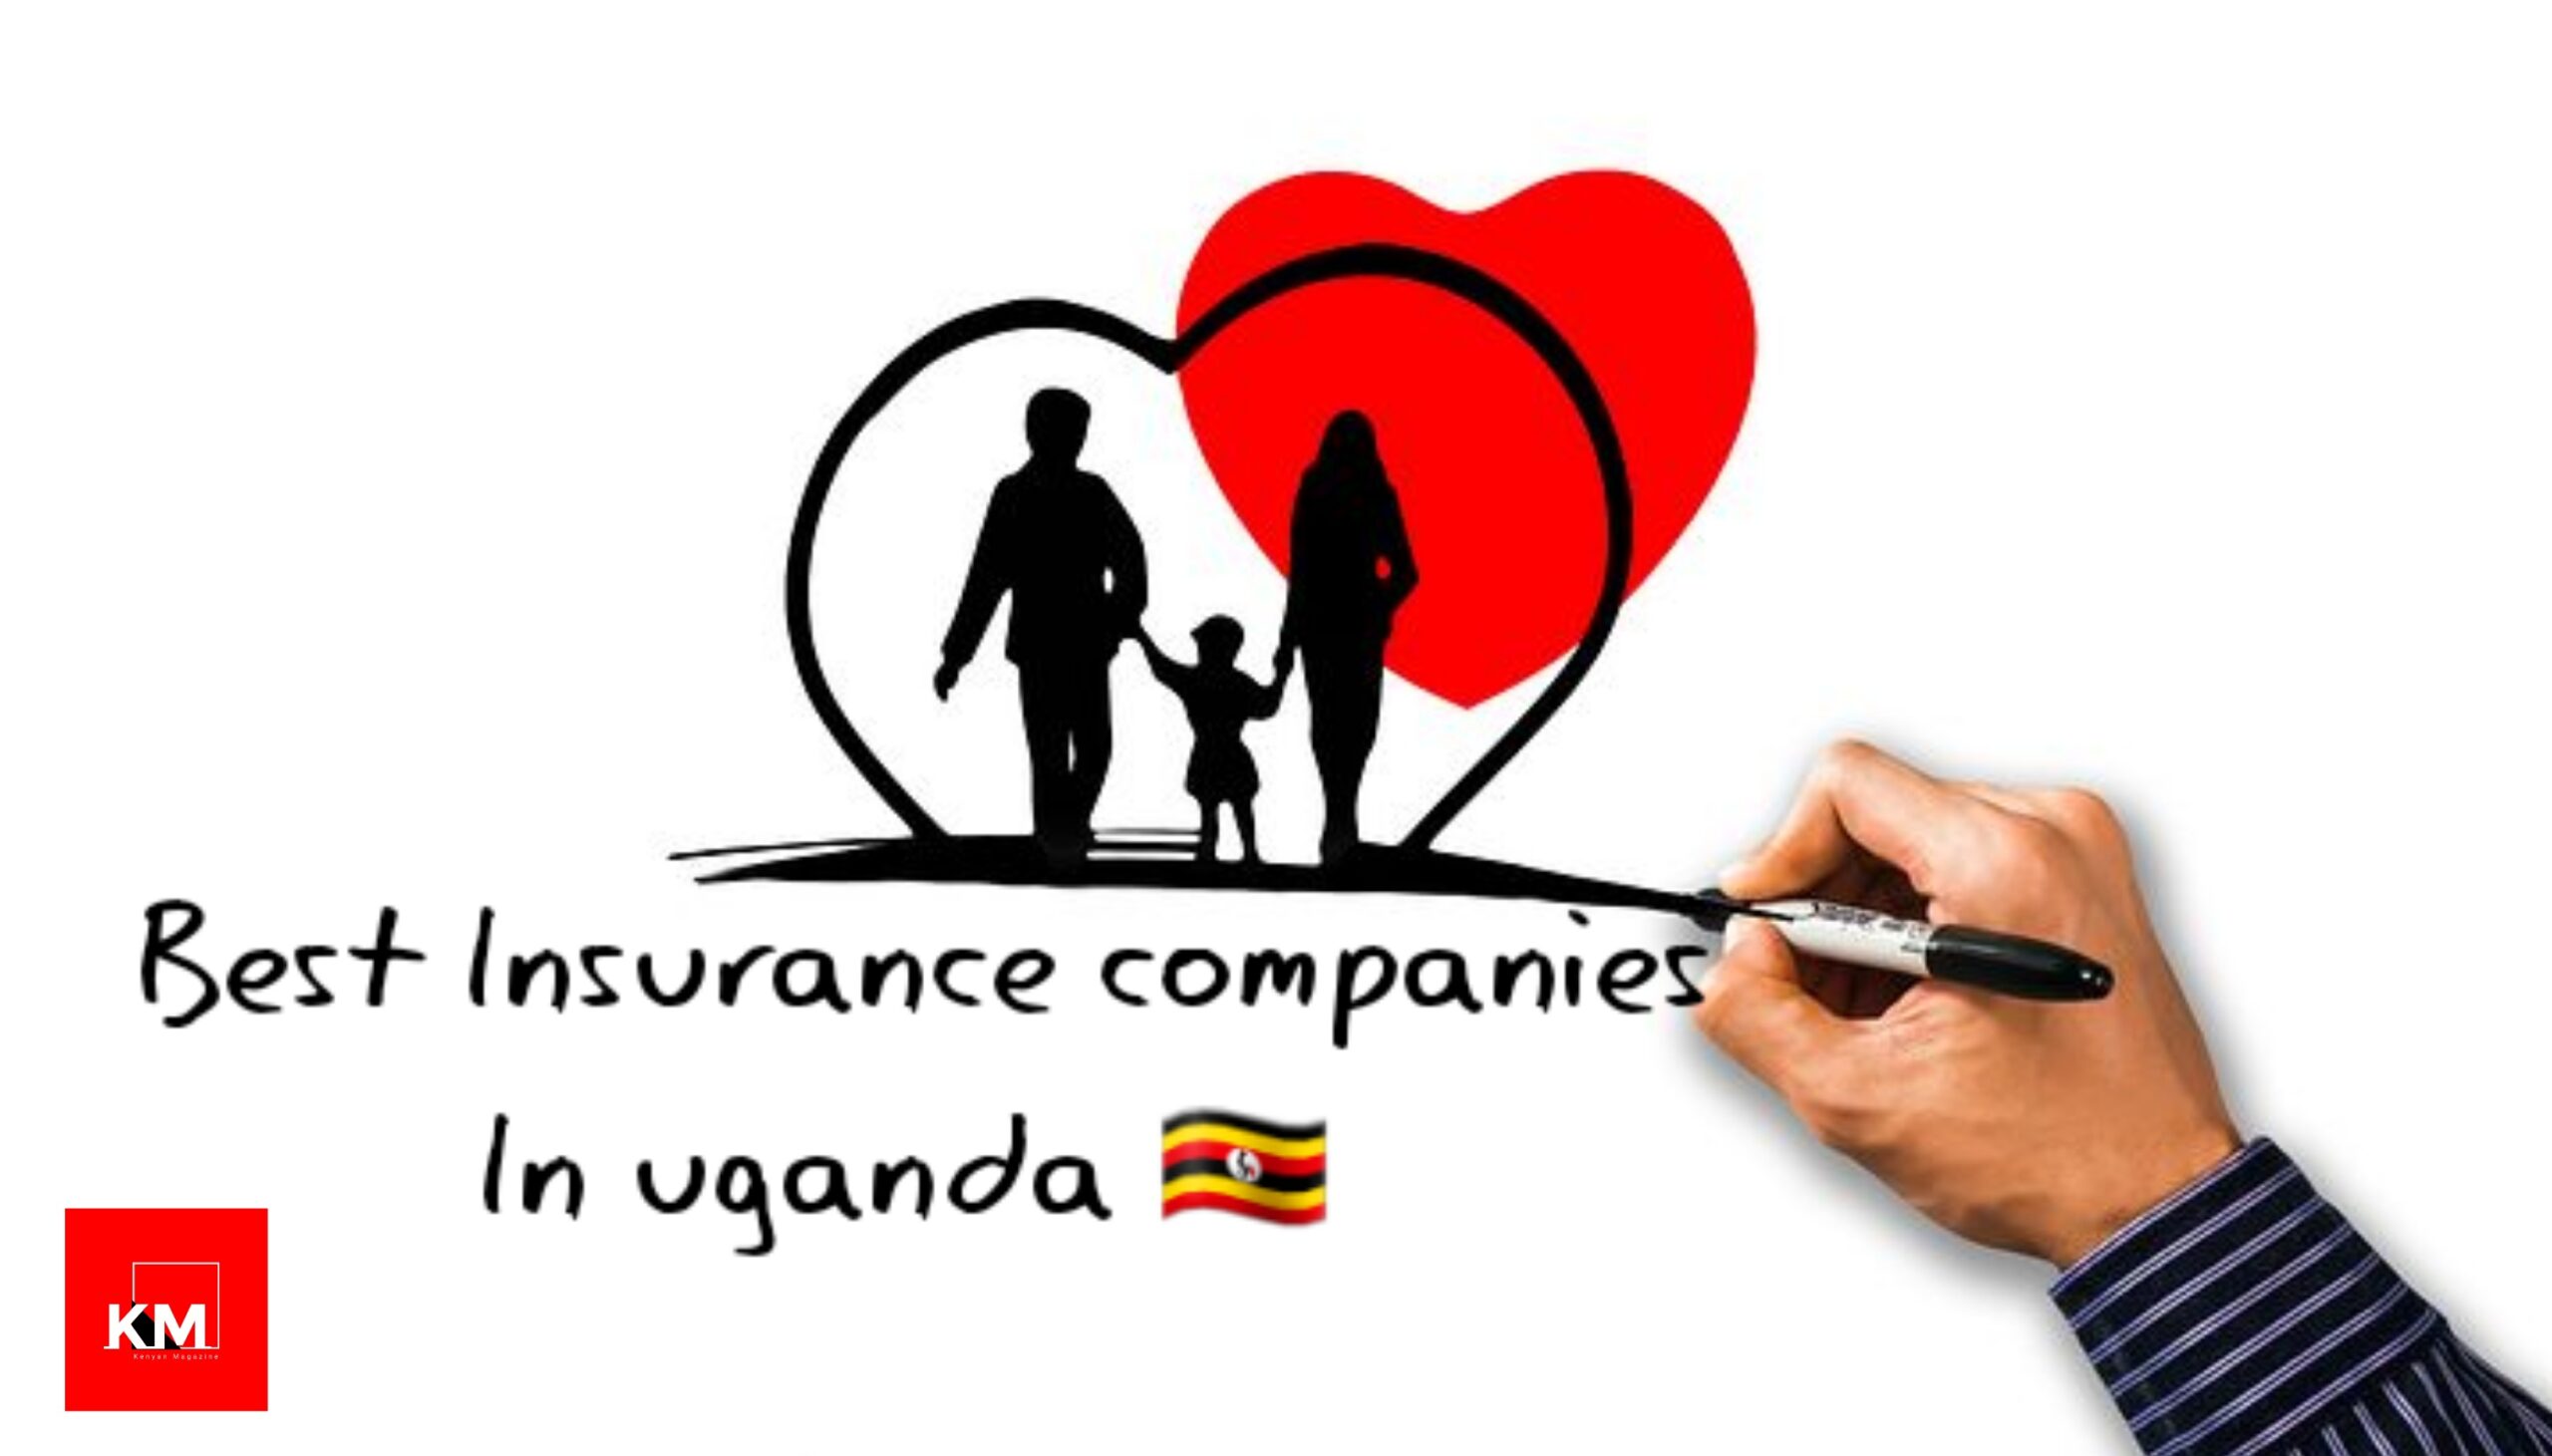 Best Insurance companies in uganda